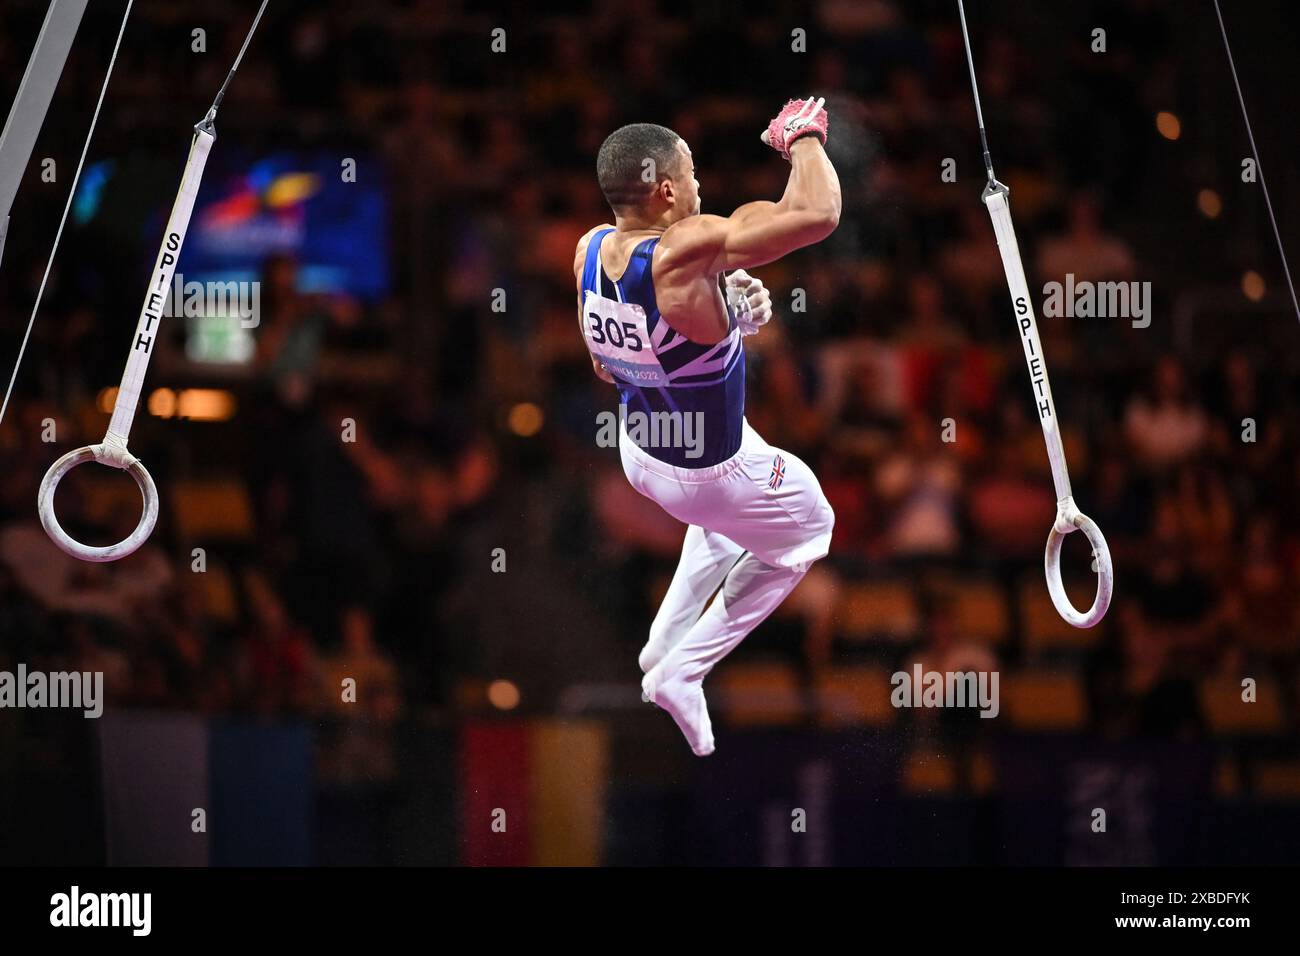 Joe Fraser (Great Britain). European Championships Munich 2022: Artistic Gymnastics, Men's Rings. Stock Photo